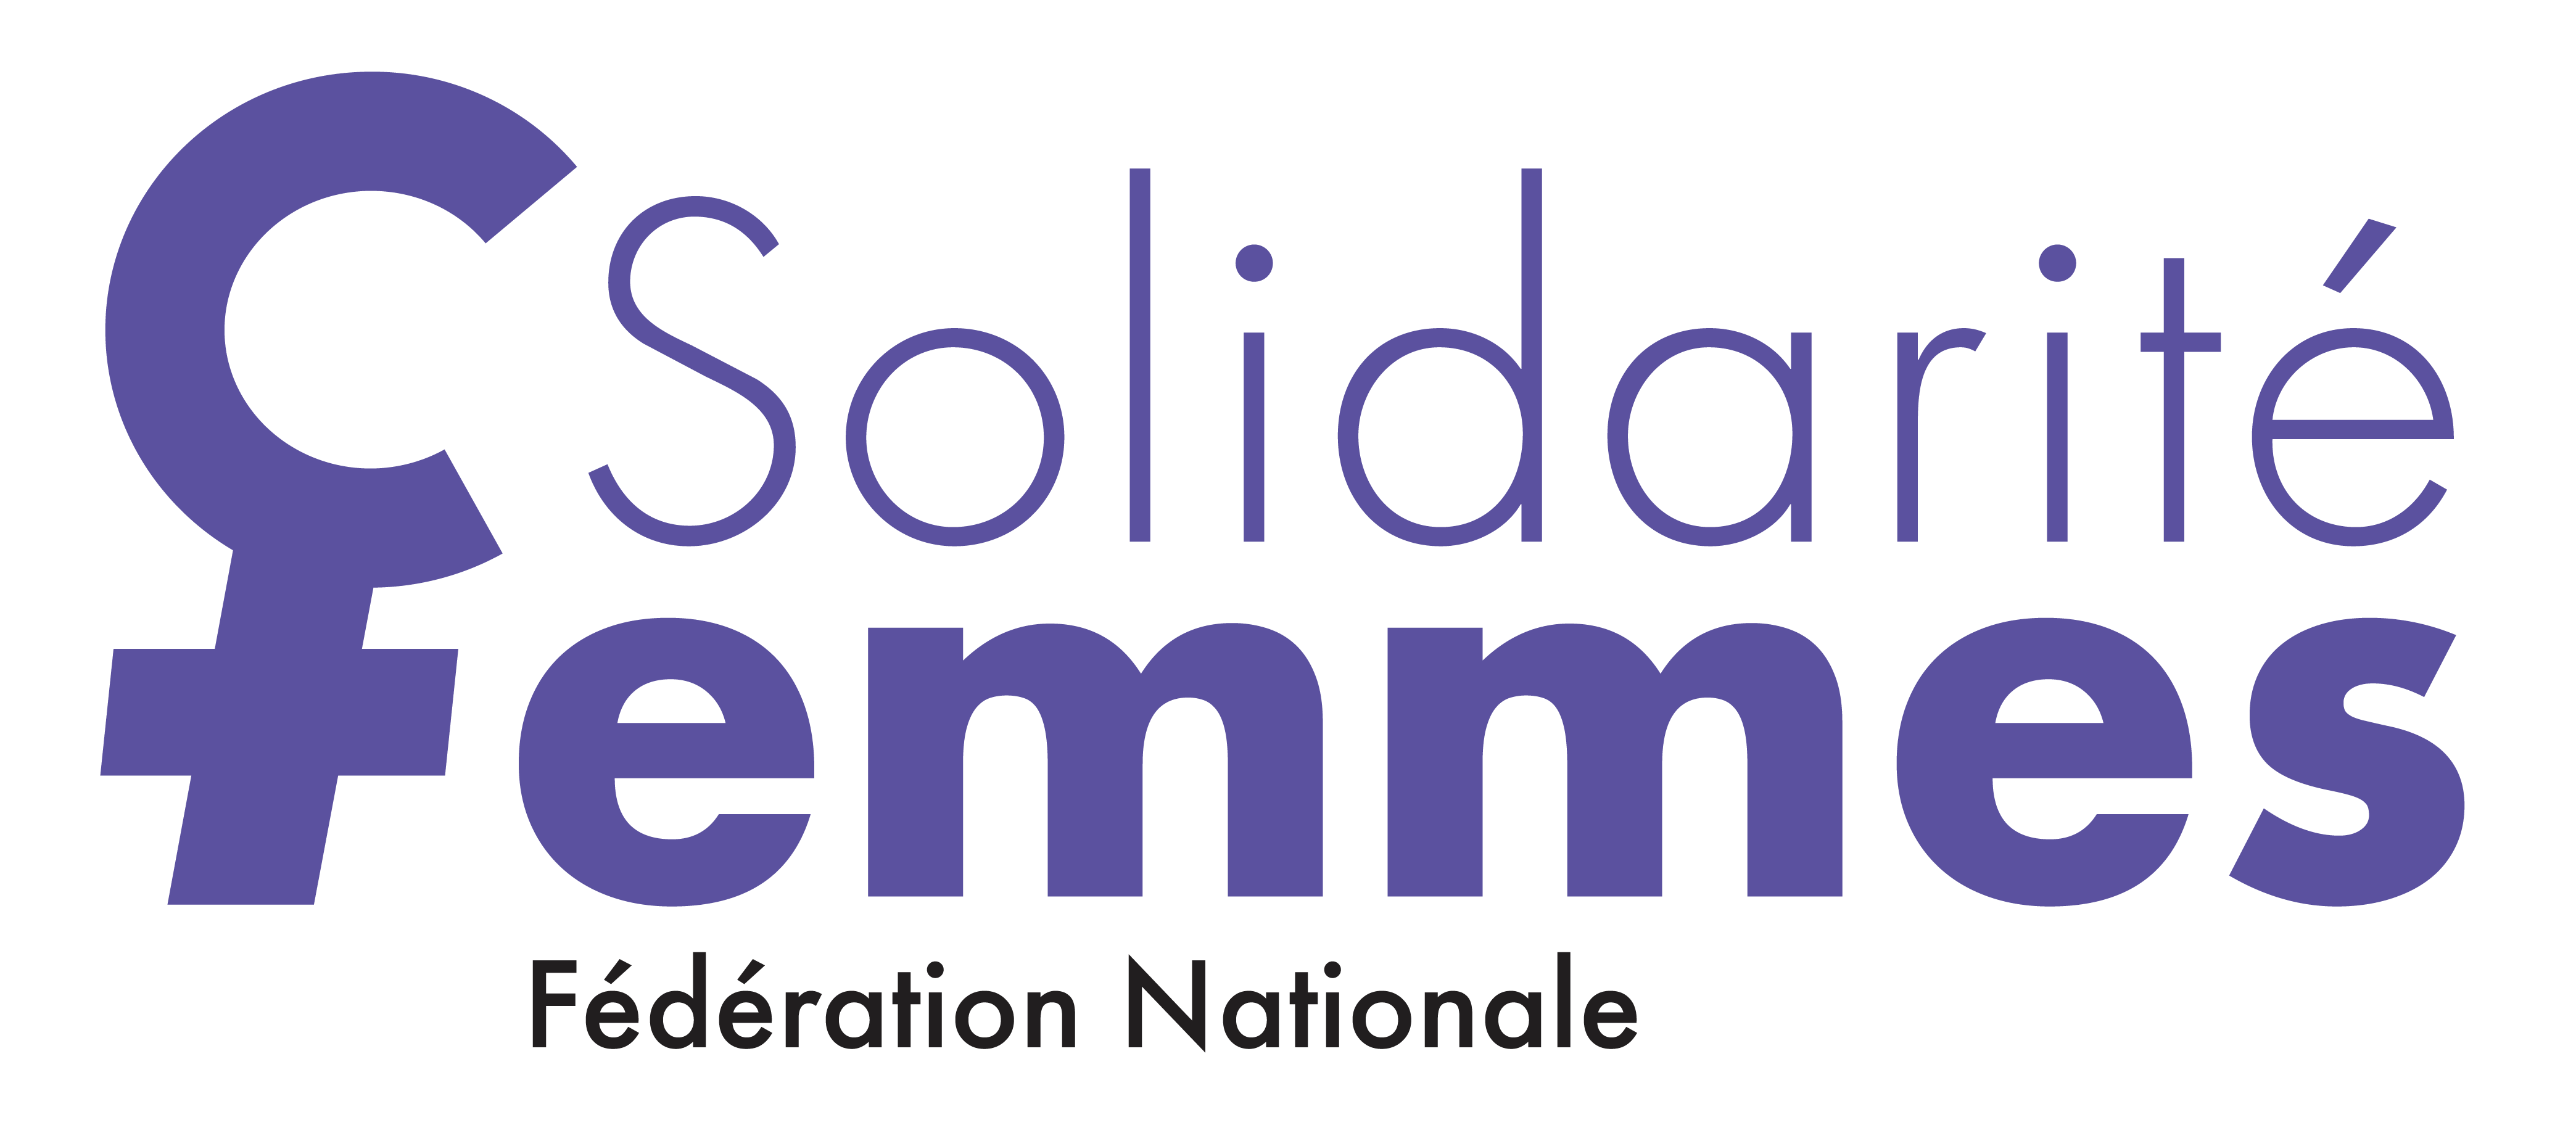 Fédération Nationale Solidarité Femmes (FNSF)